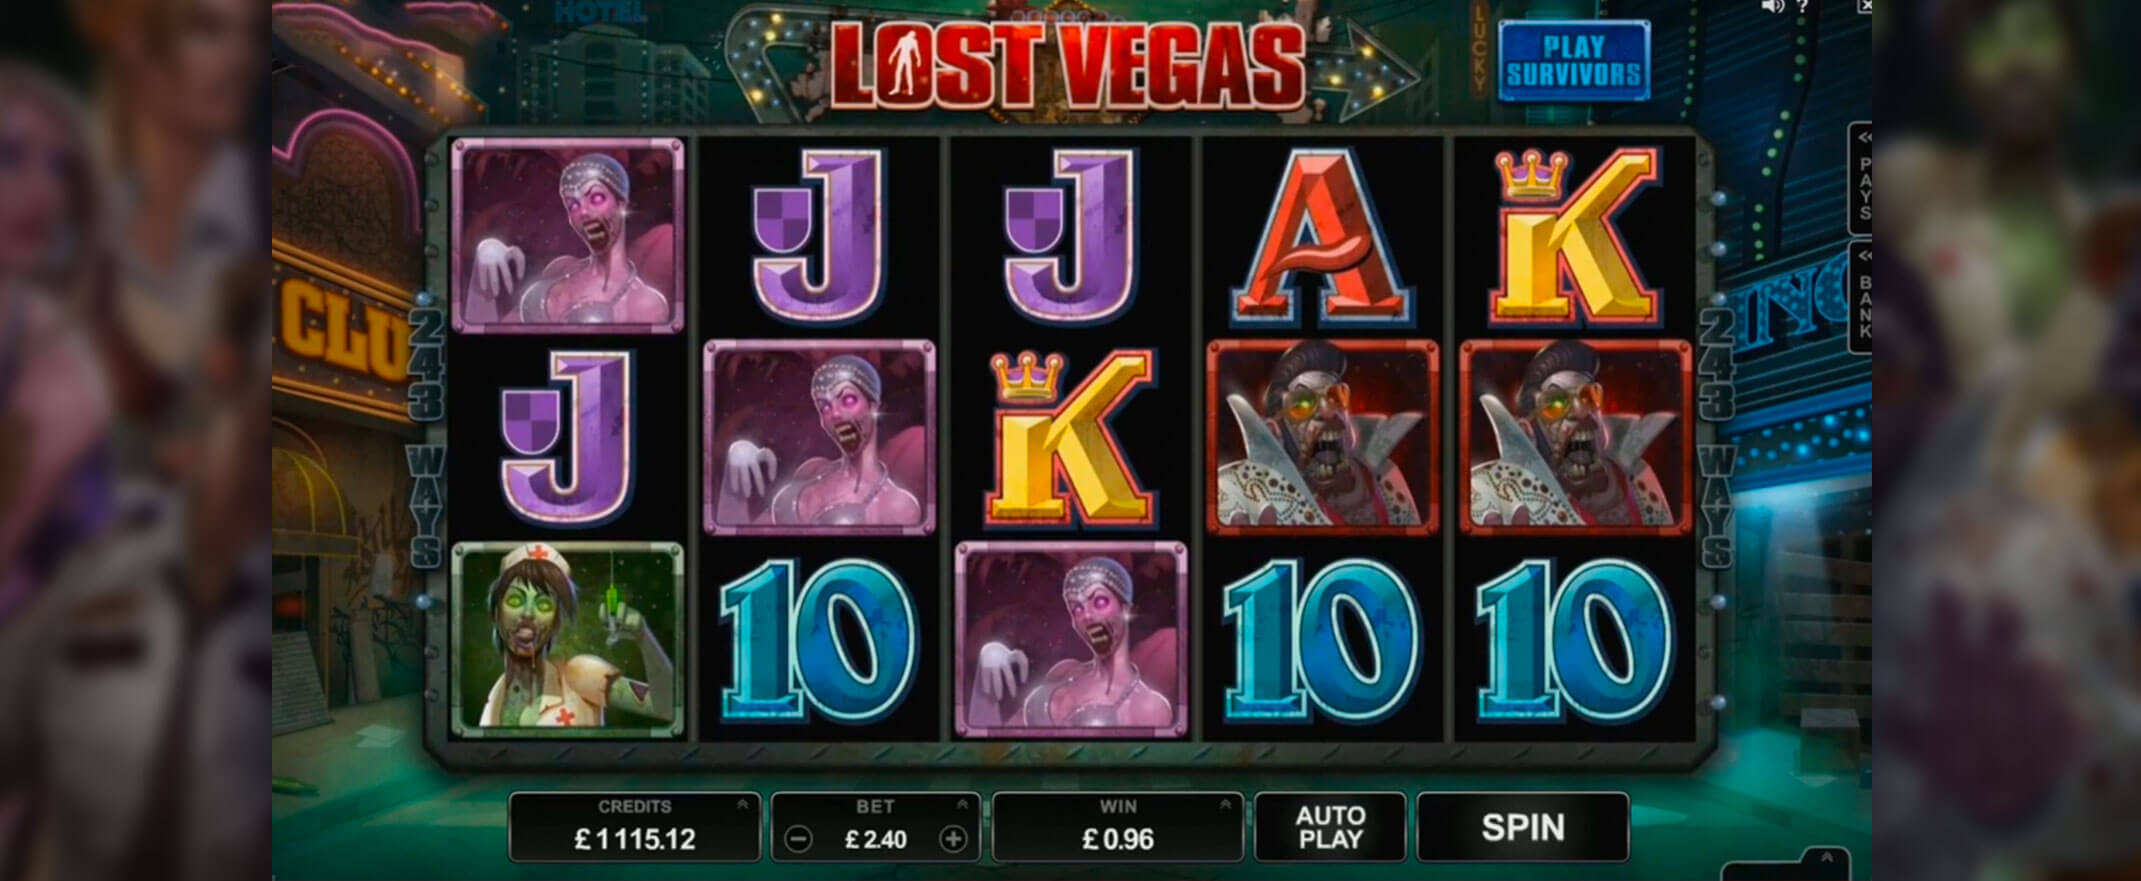 Lost Vegas Spielautomaten Bewertung